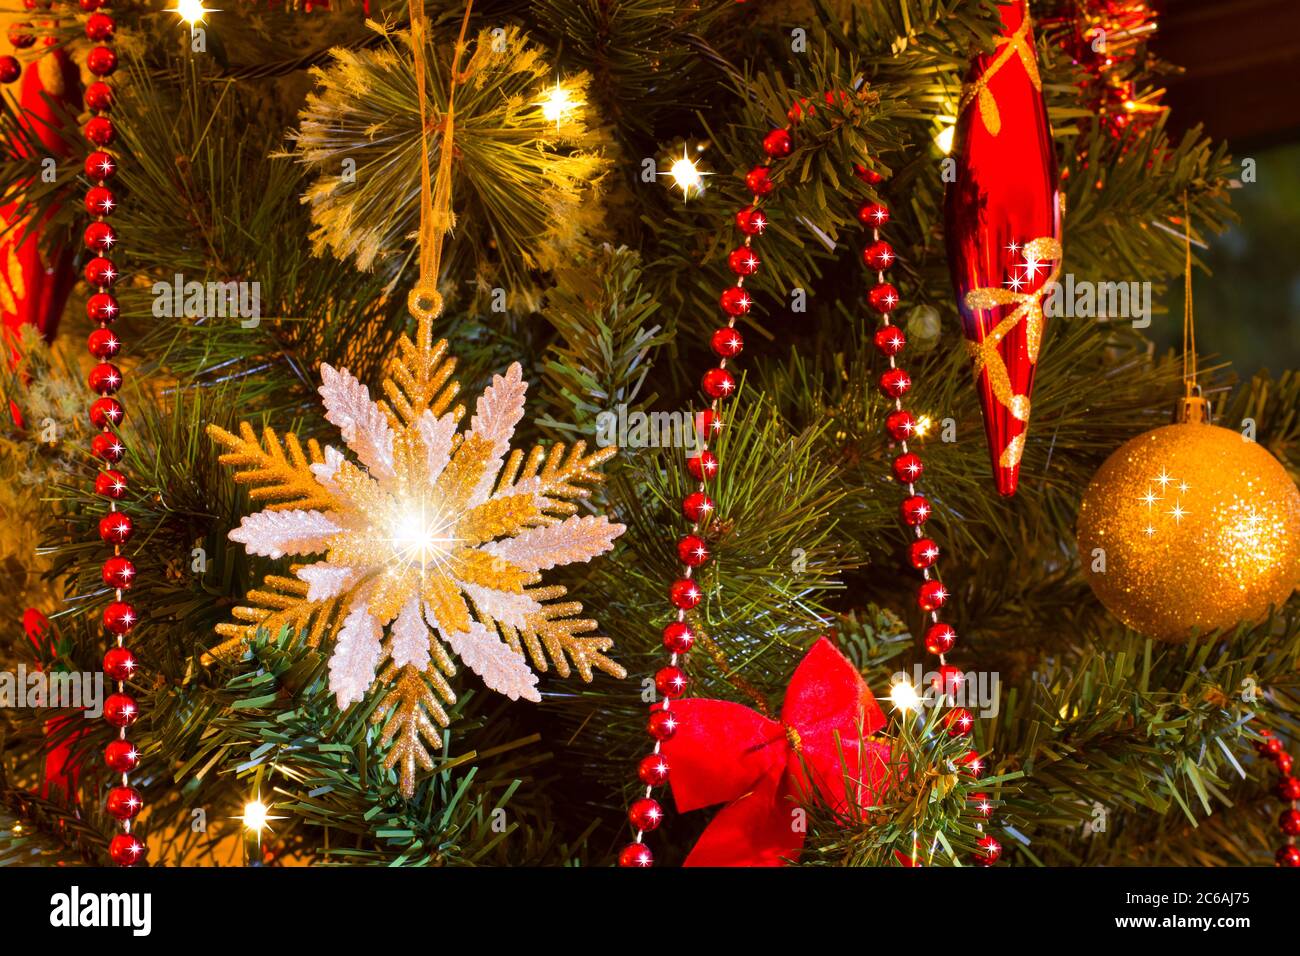 Christmas tree decorations on a tree Stock Photo